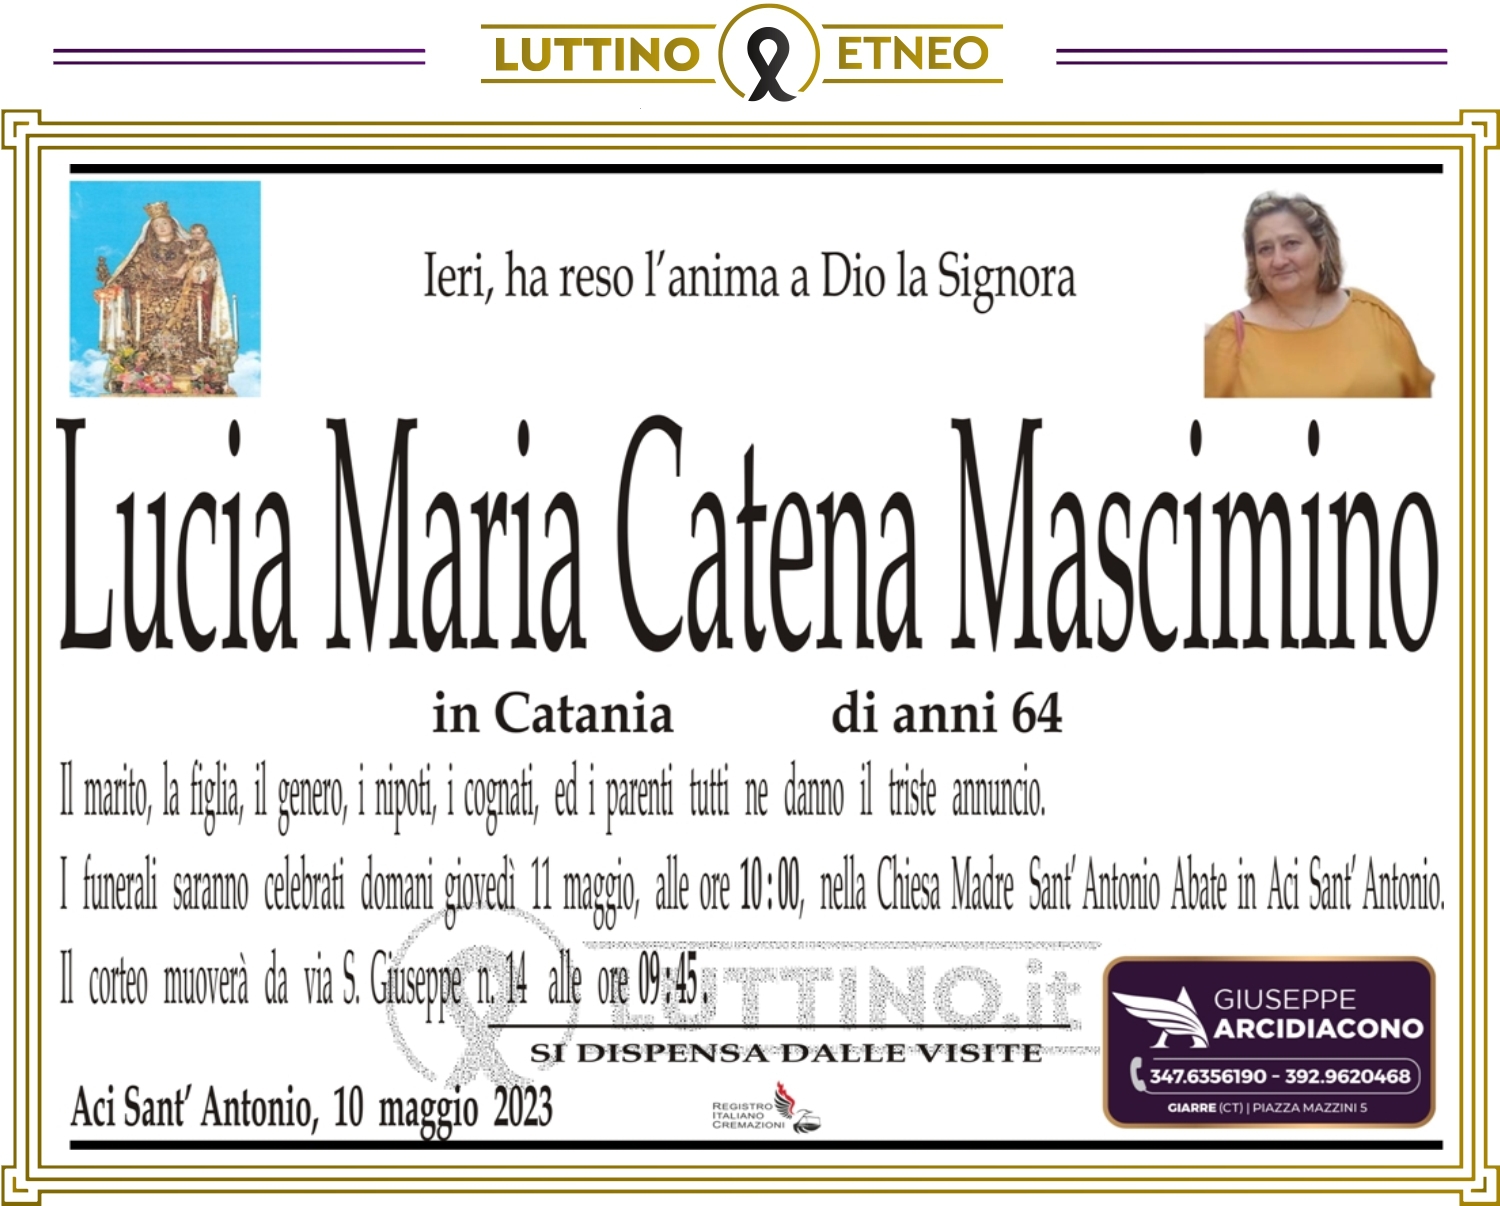 Lucia Maria Catena Mascimino